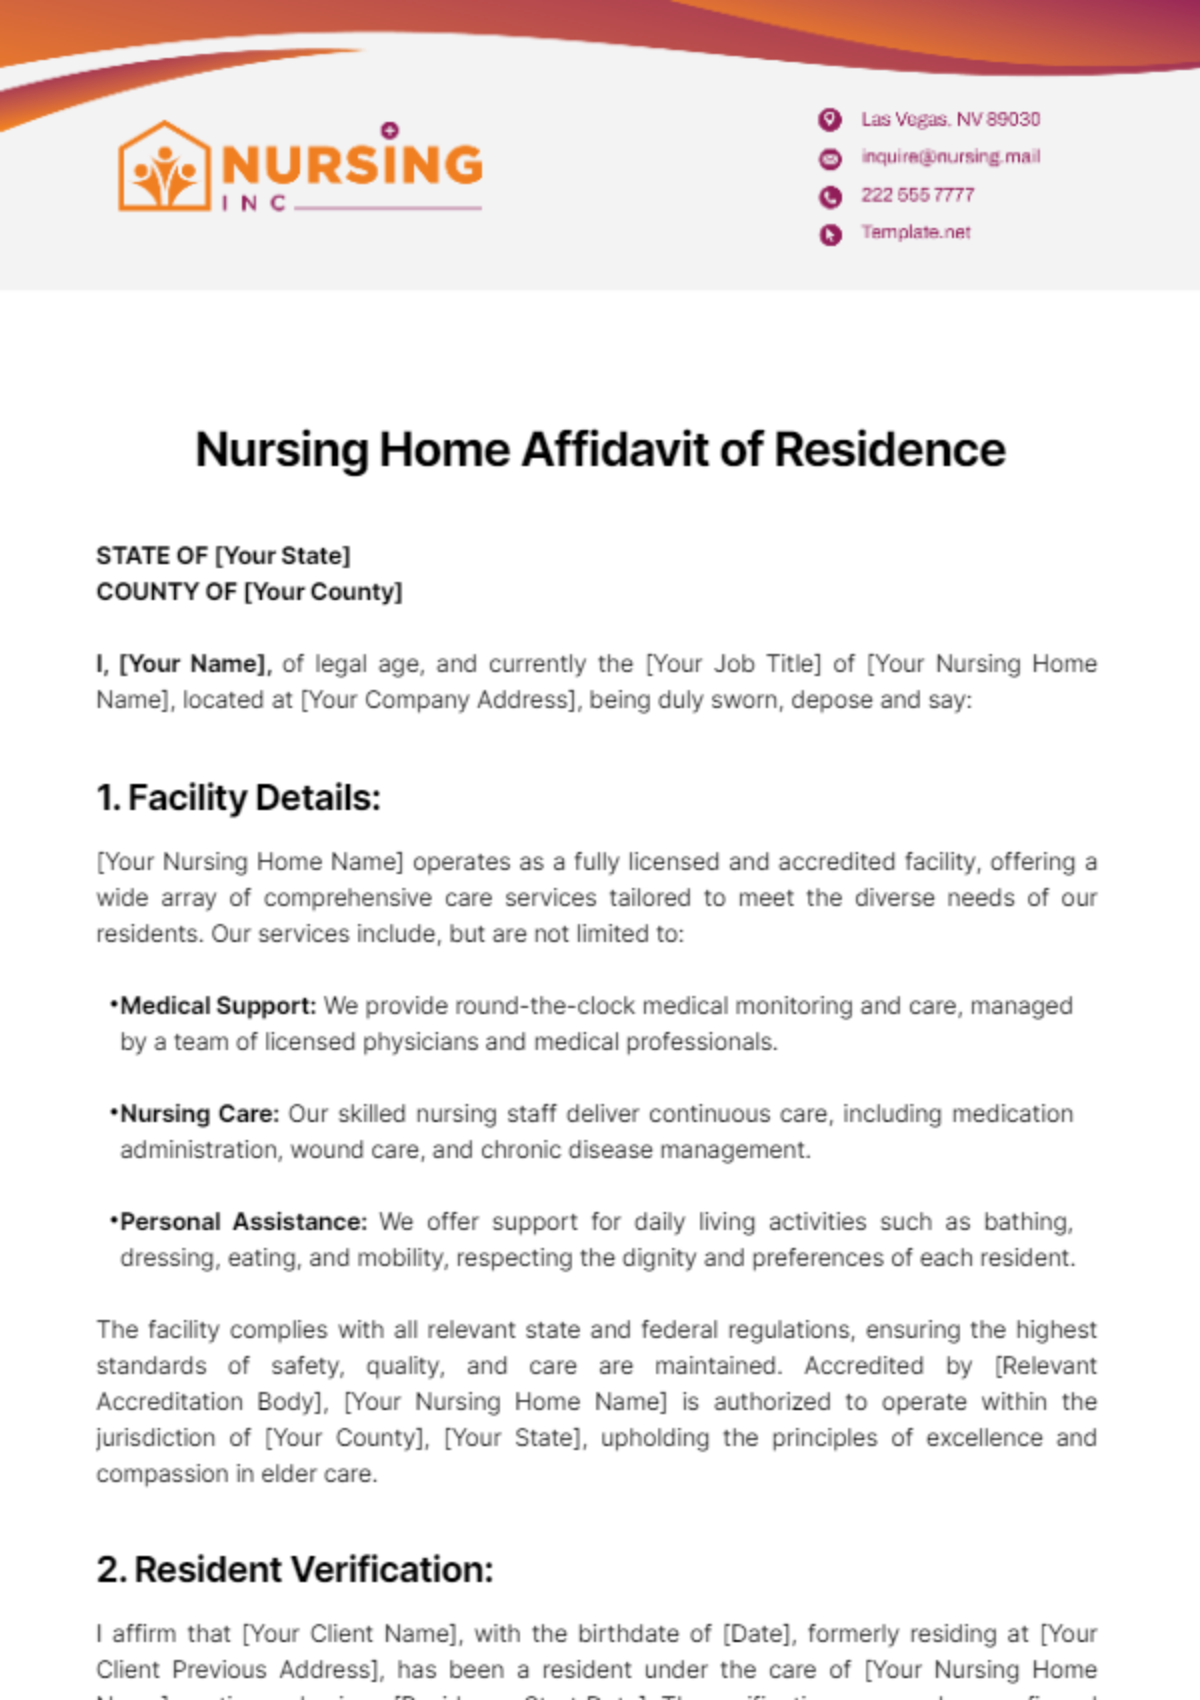 Nursing Home Affidavit of Residence Template